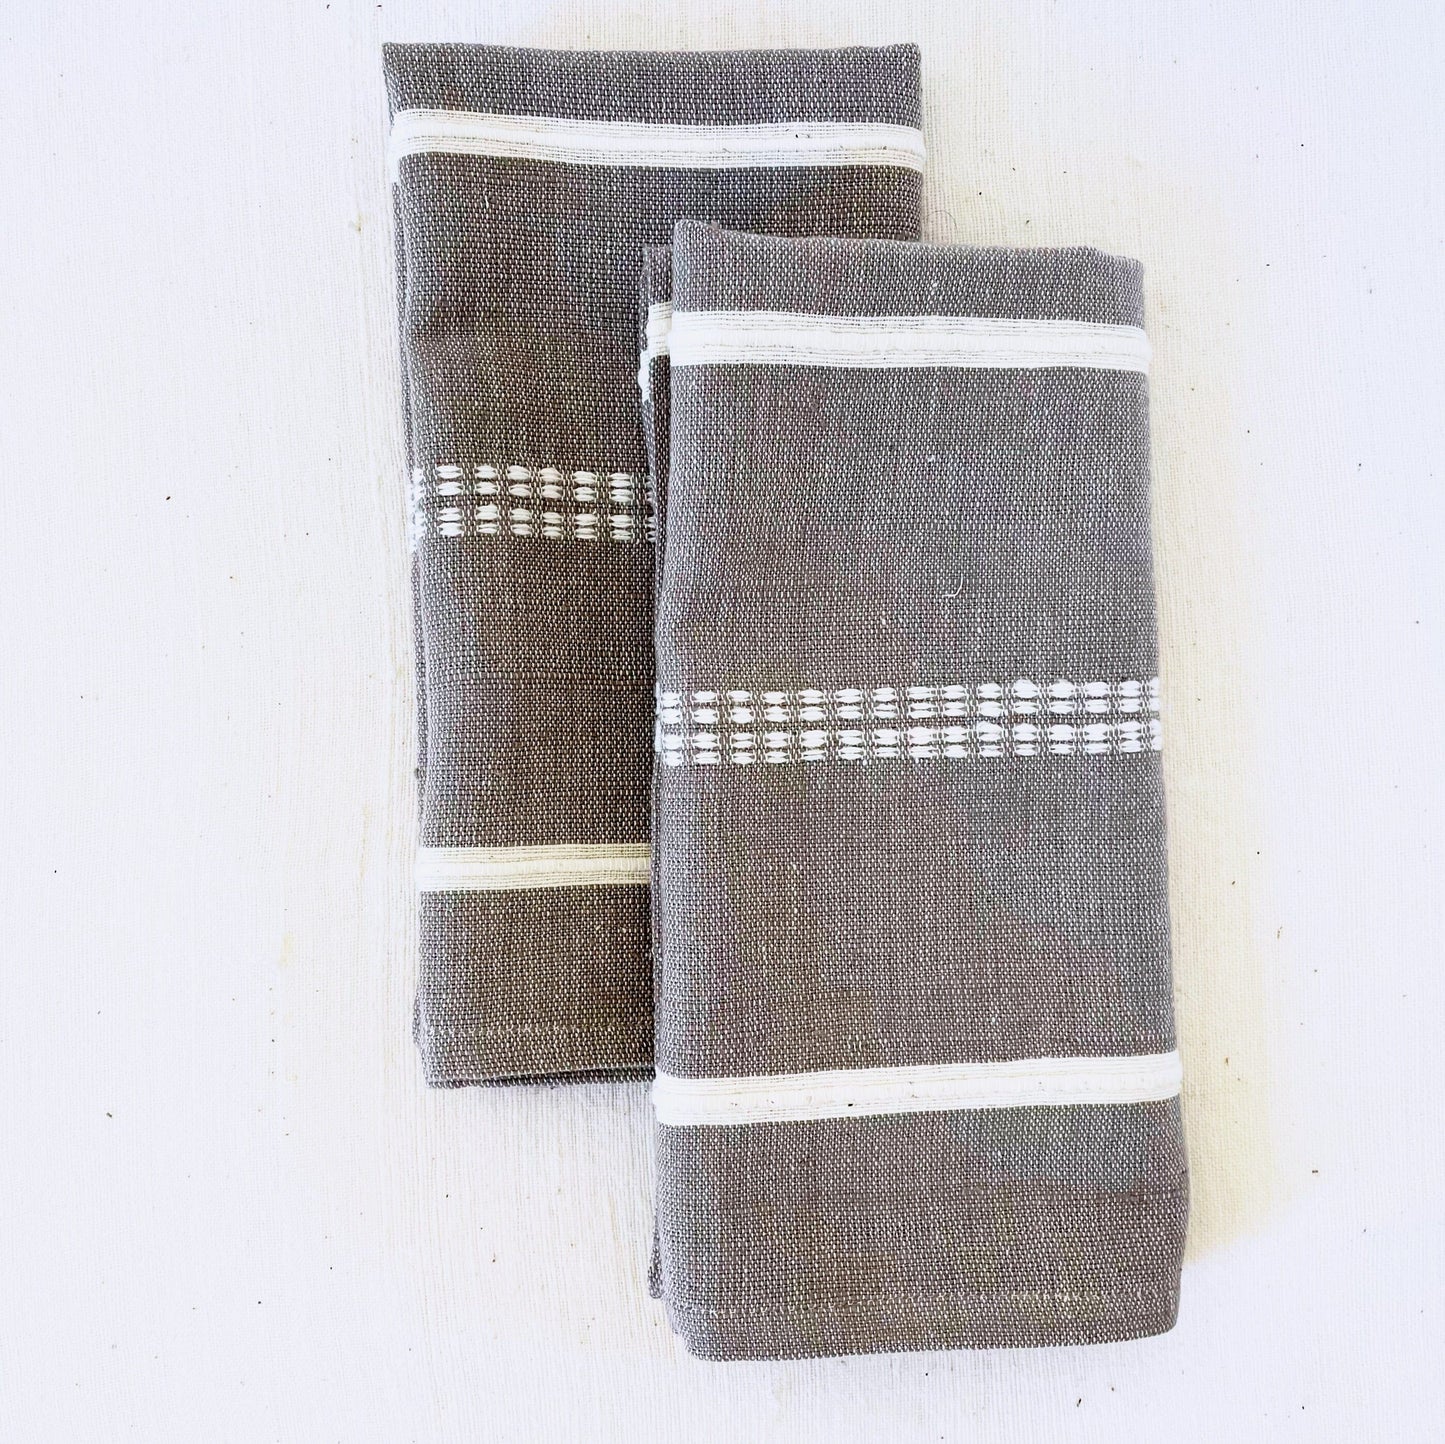 Zinach handwoven Ethiopian cotton napkin napkin sabahar Stone 